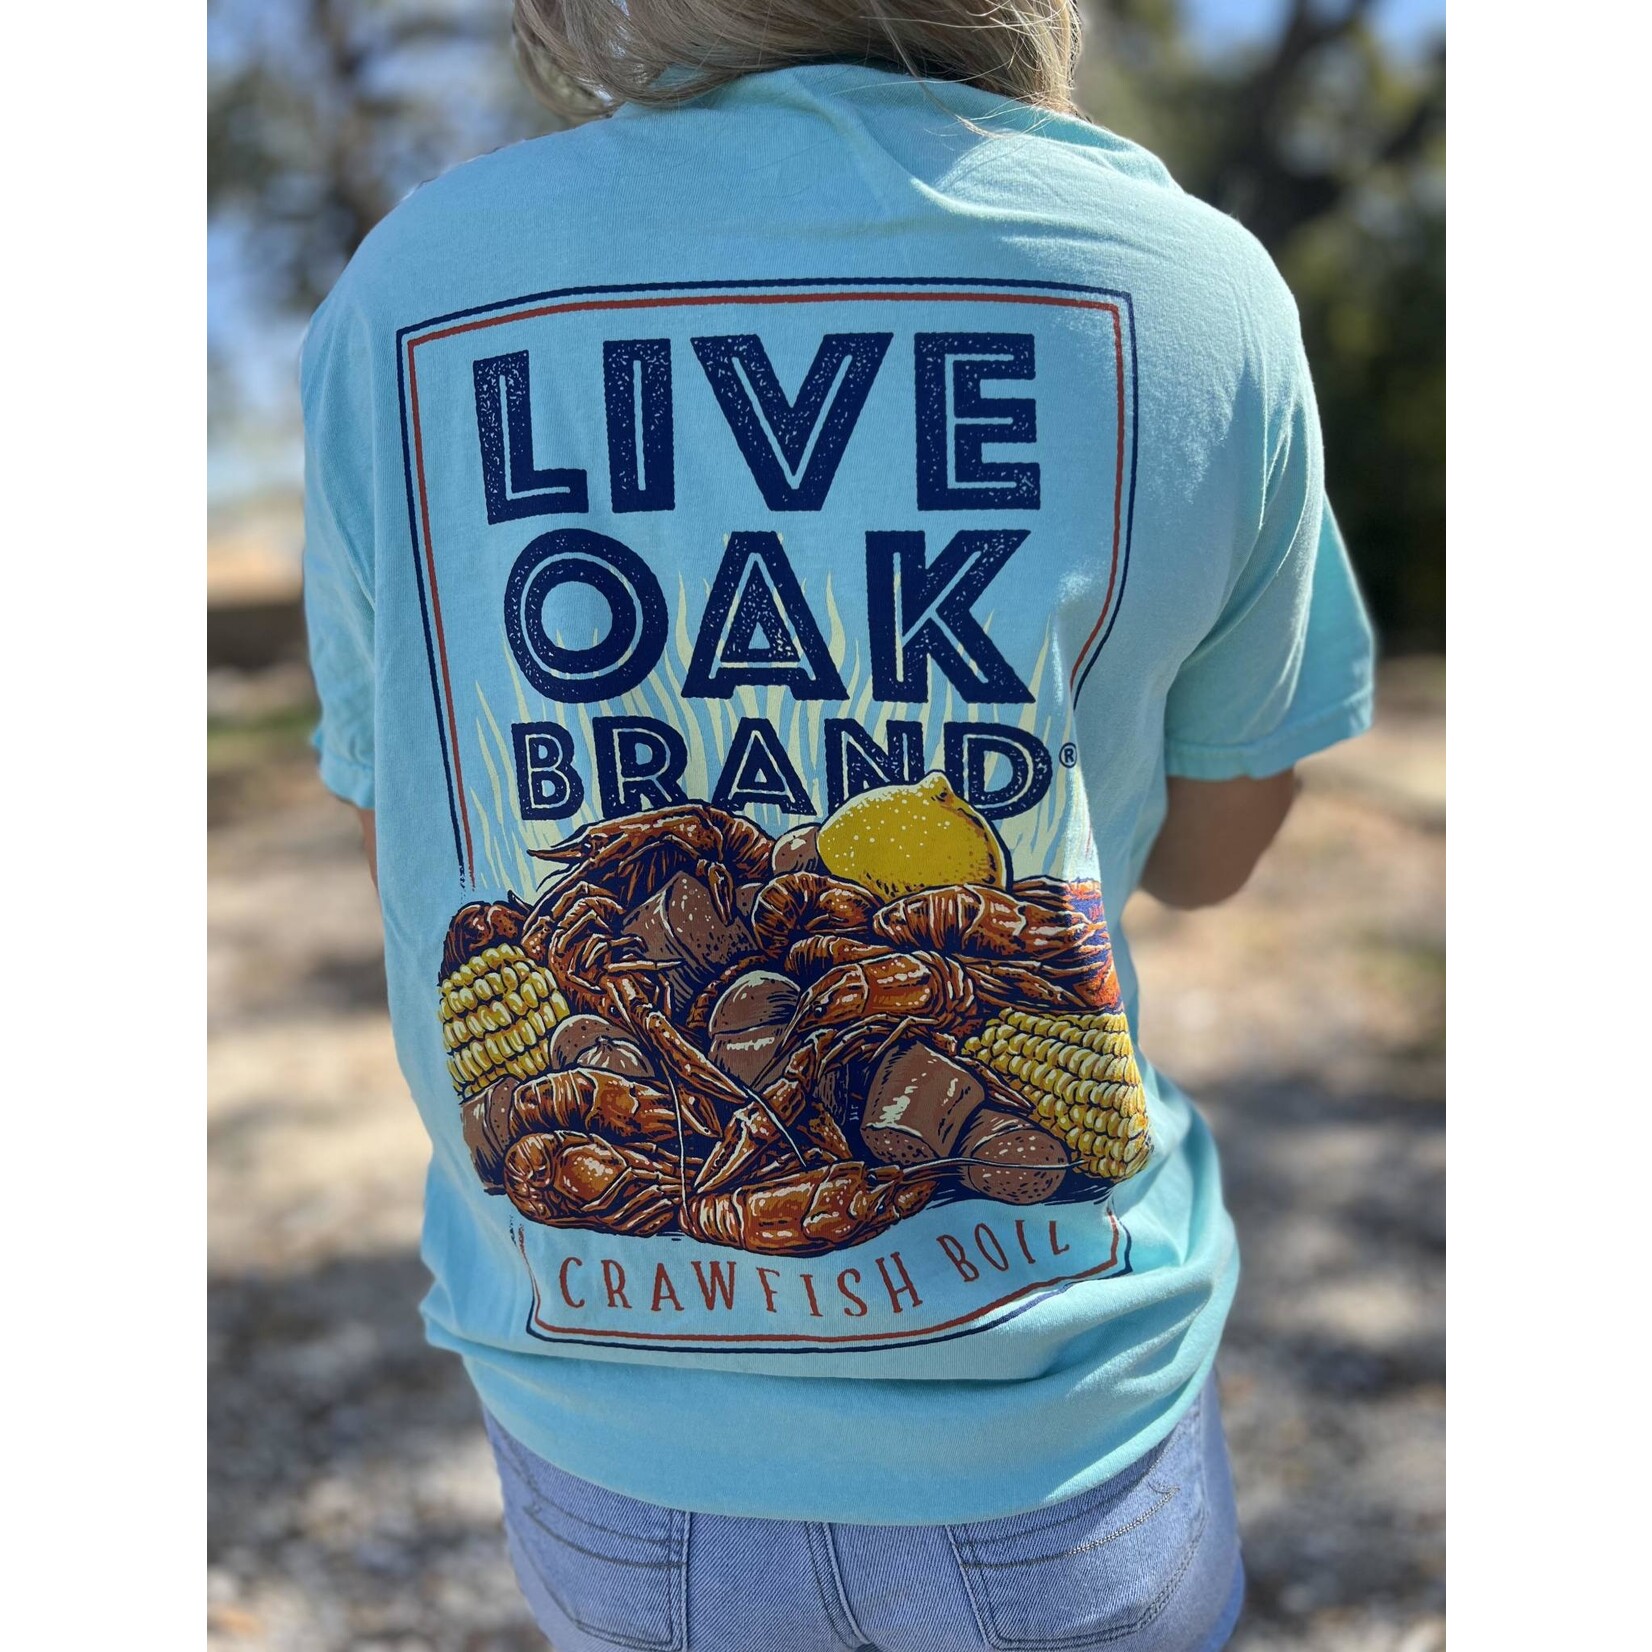 Live Oak Brand Live Oak Brand Crawfish Boil S/S TEE Shirt